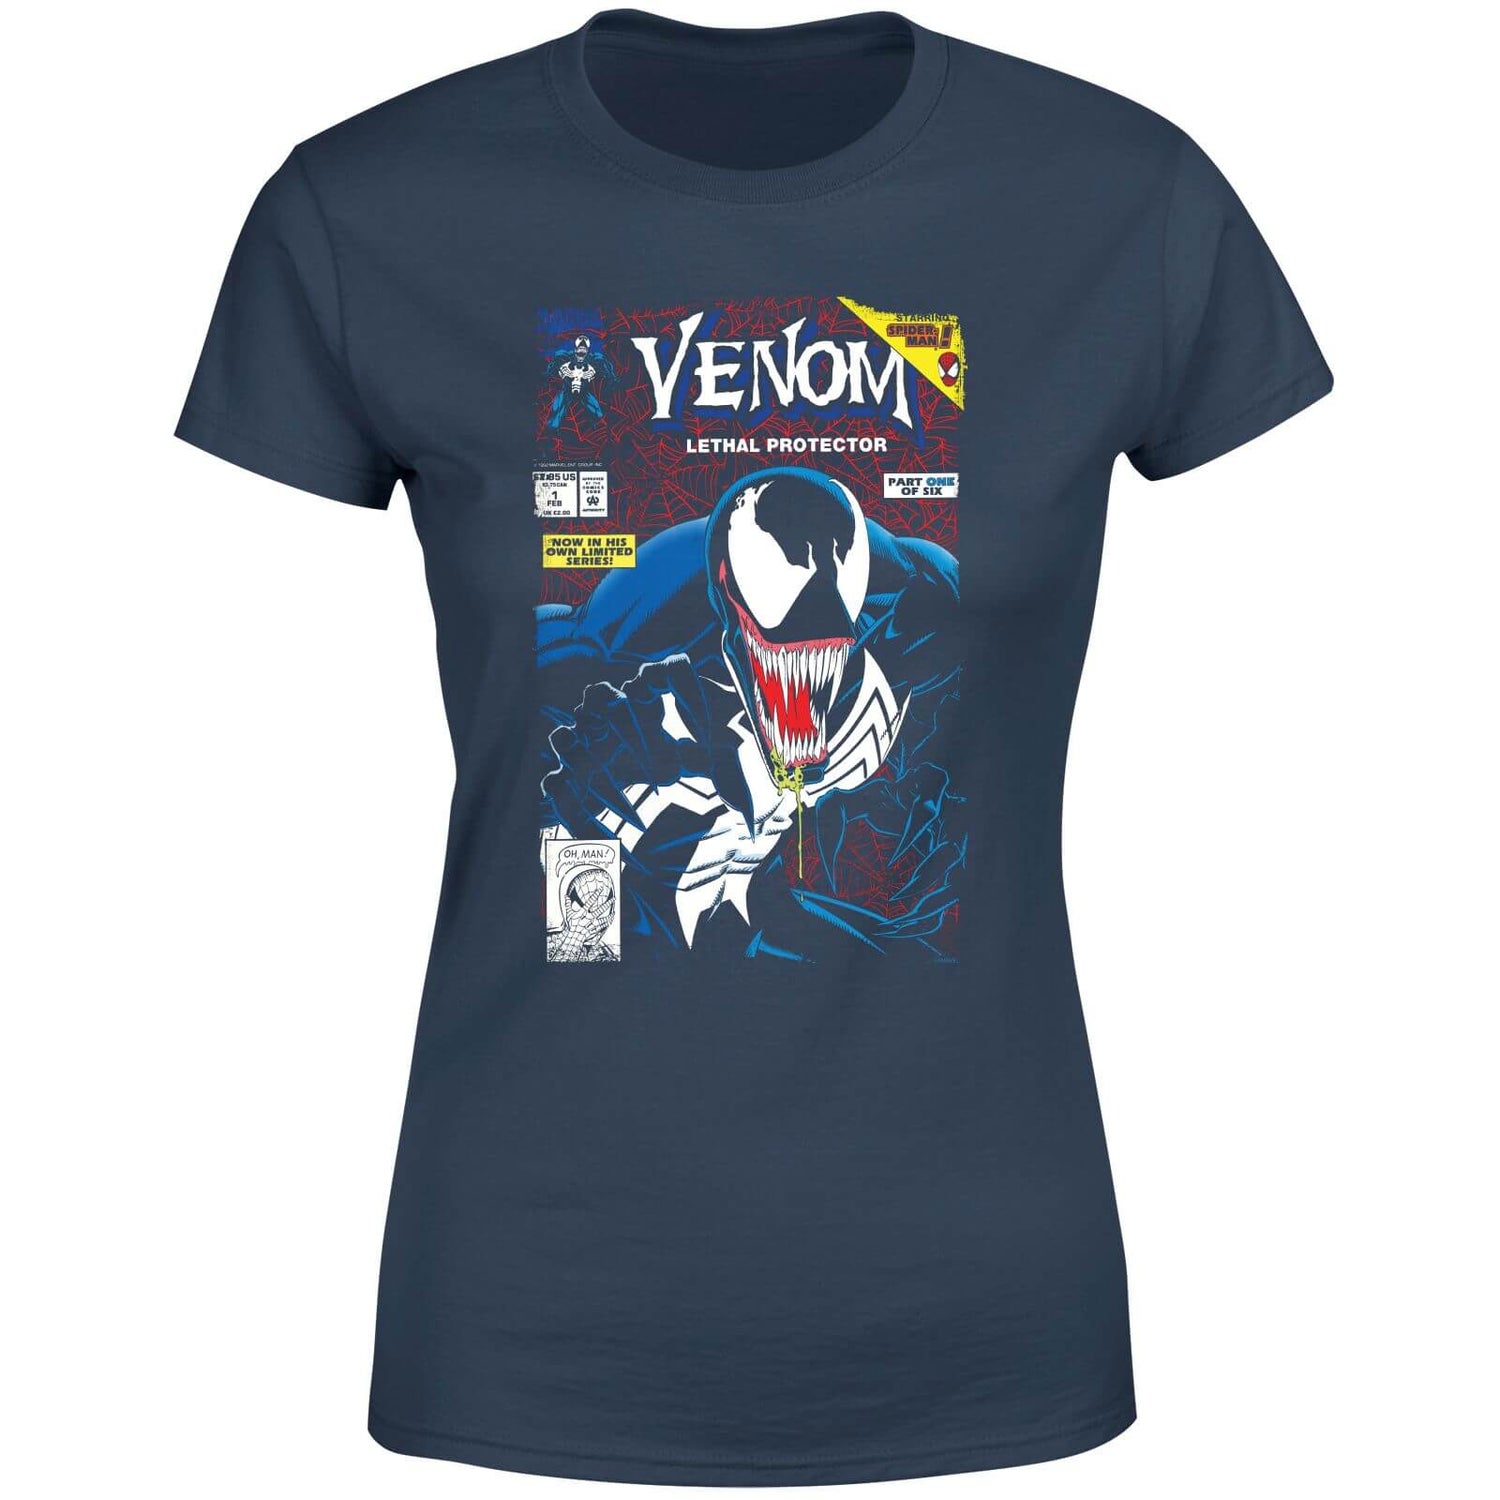 Venom Lethal Protector Women's T-Shirt - Navy